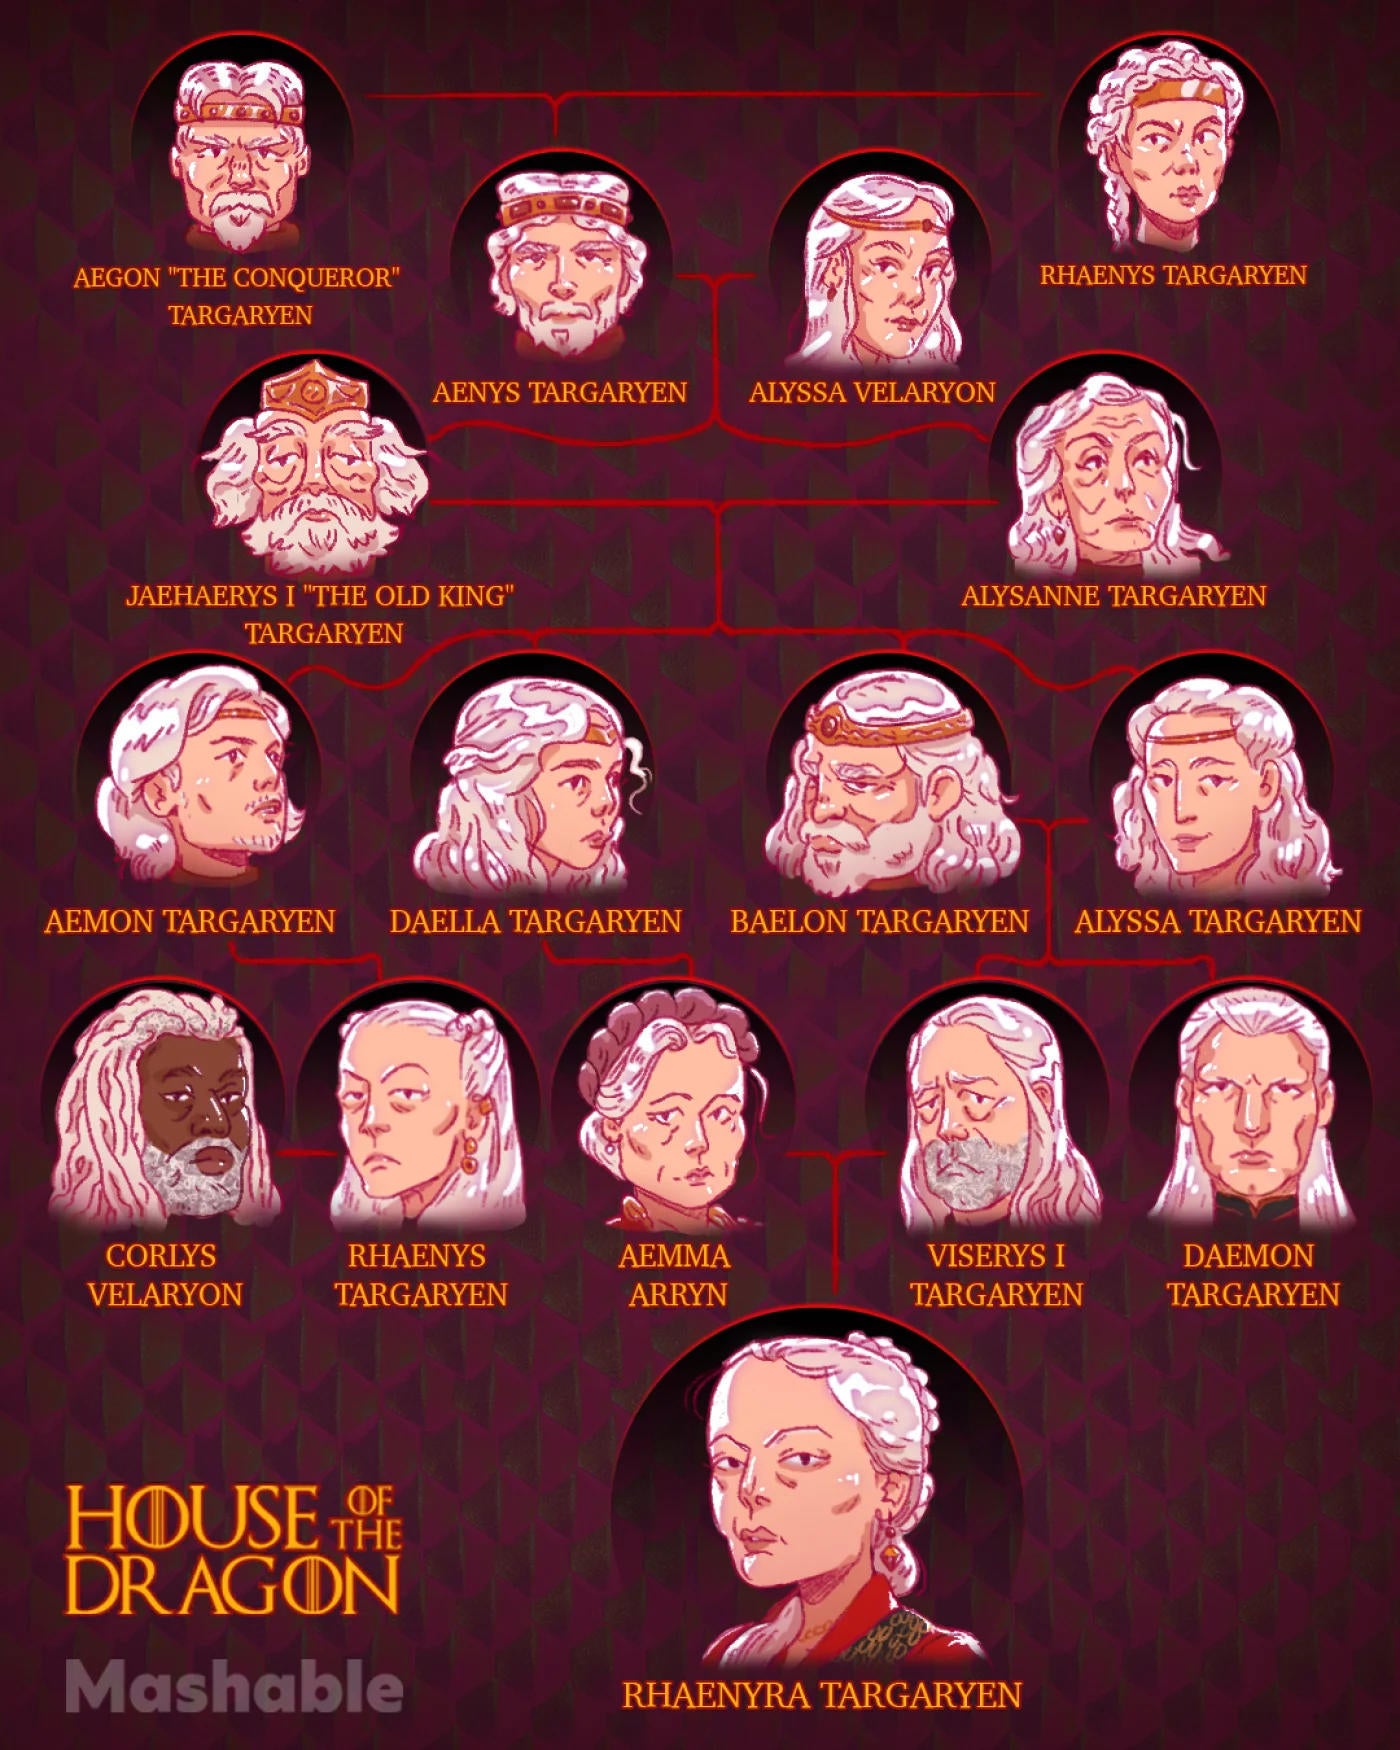 casa-do-dragão-targaryen-family-tree-infographic-by-mashable.jpg